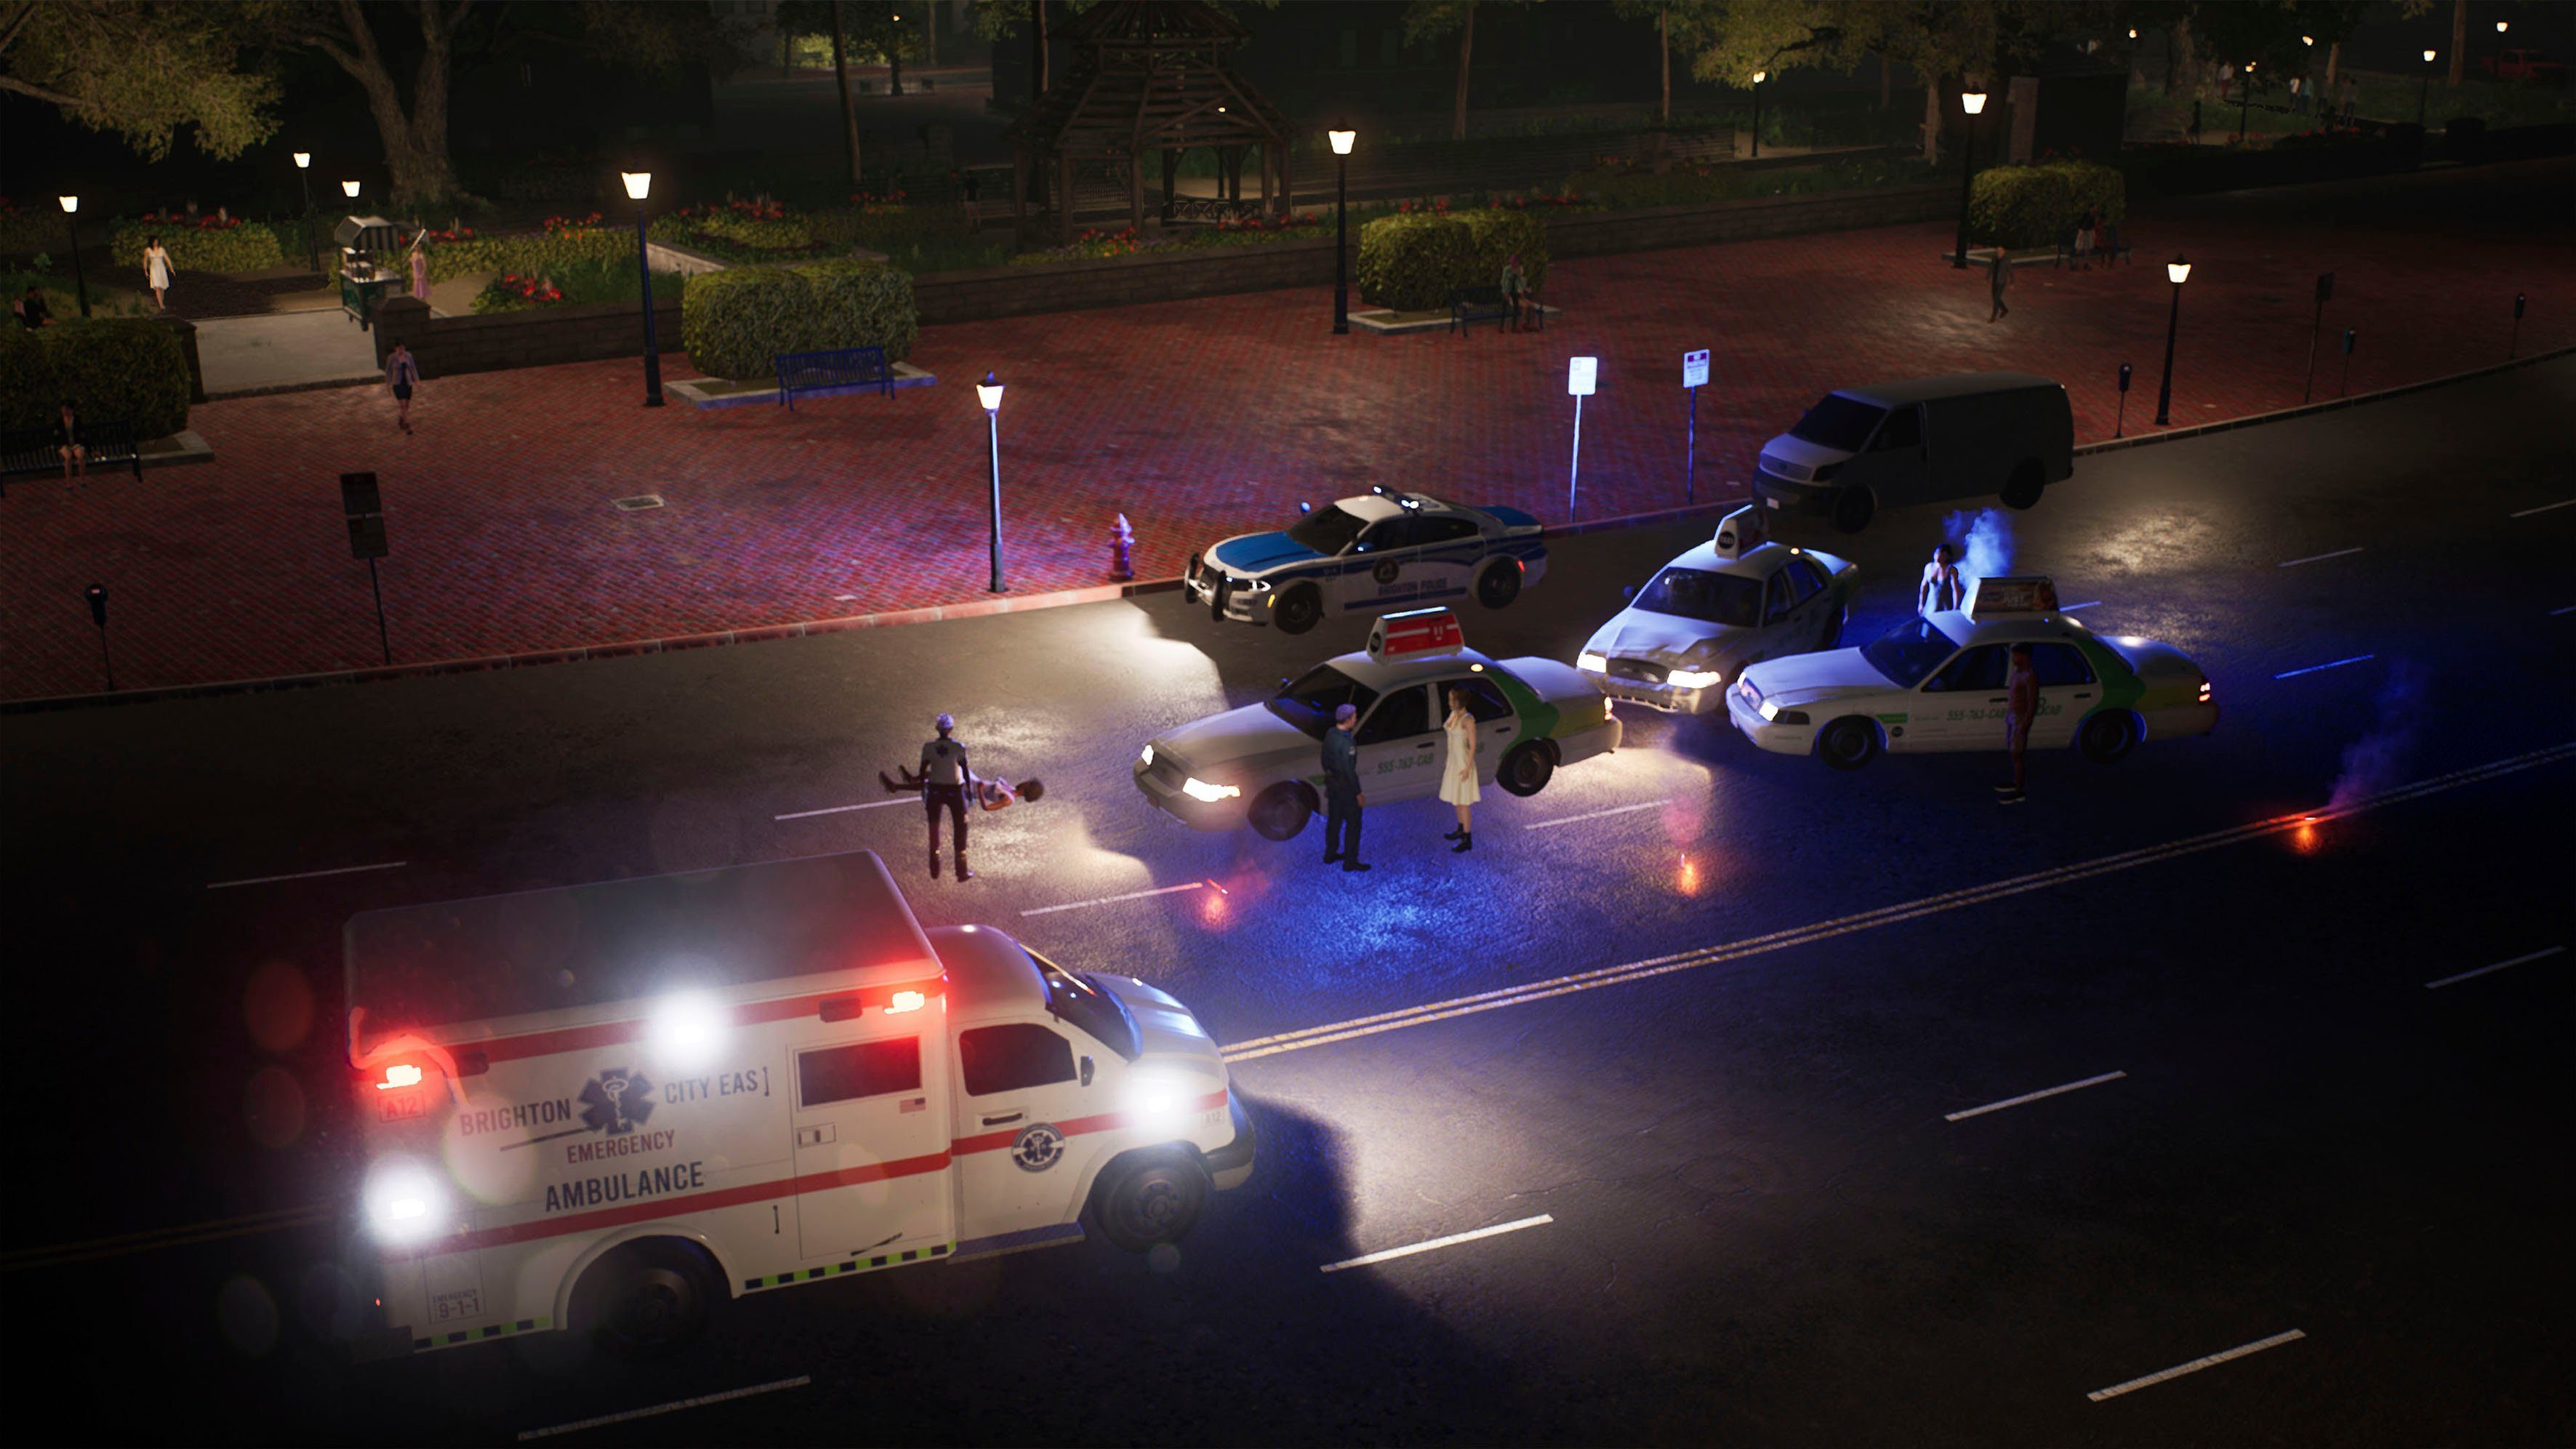 Astragon Simulator: Officers Patrol 5 Police PlayStation